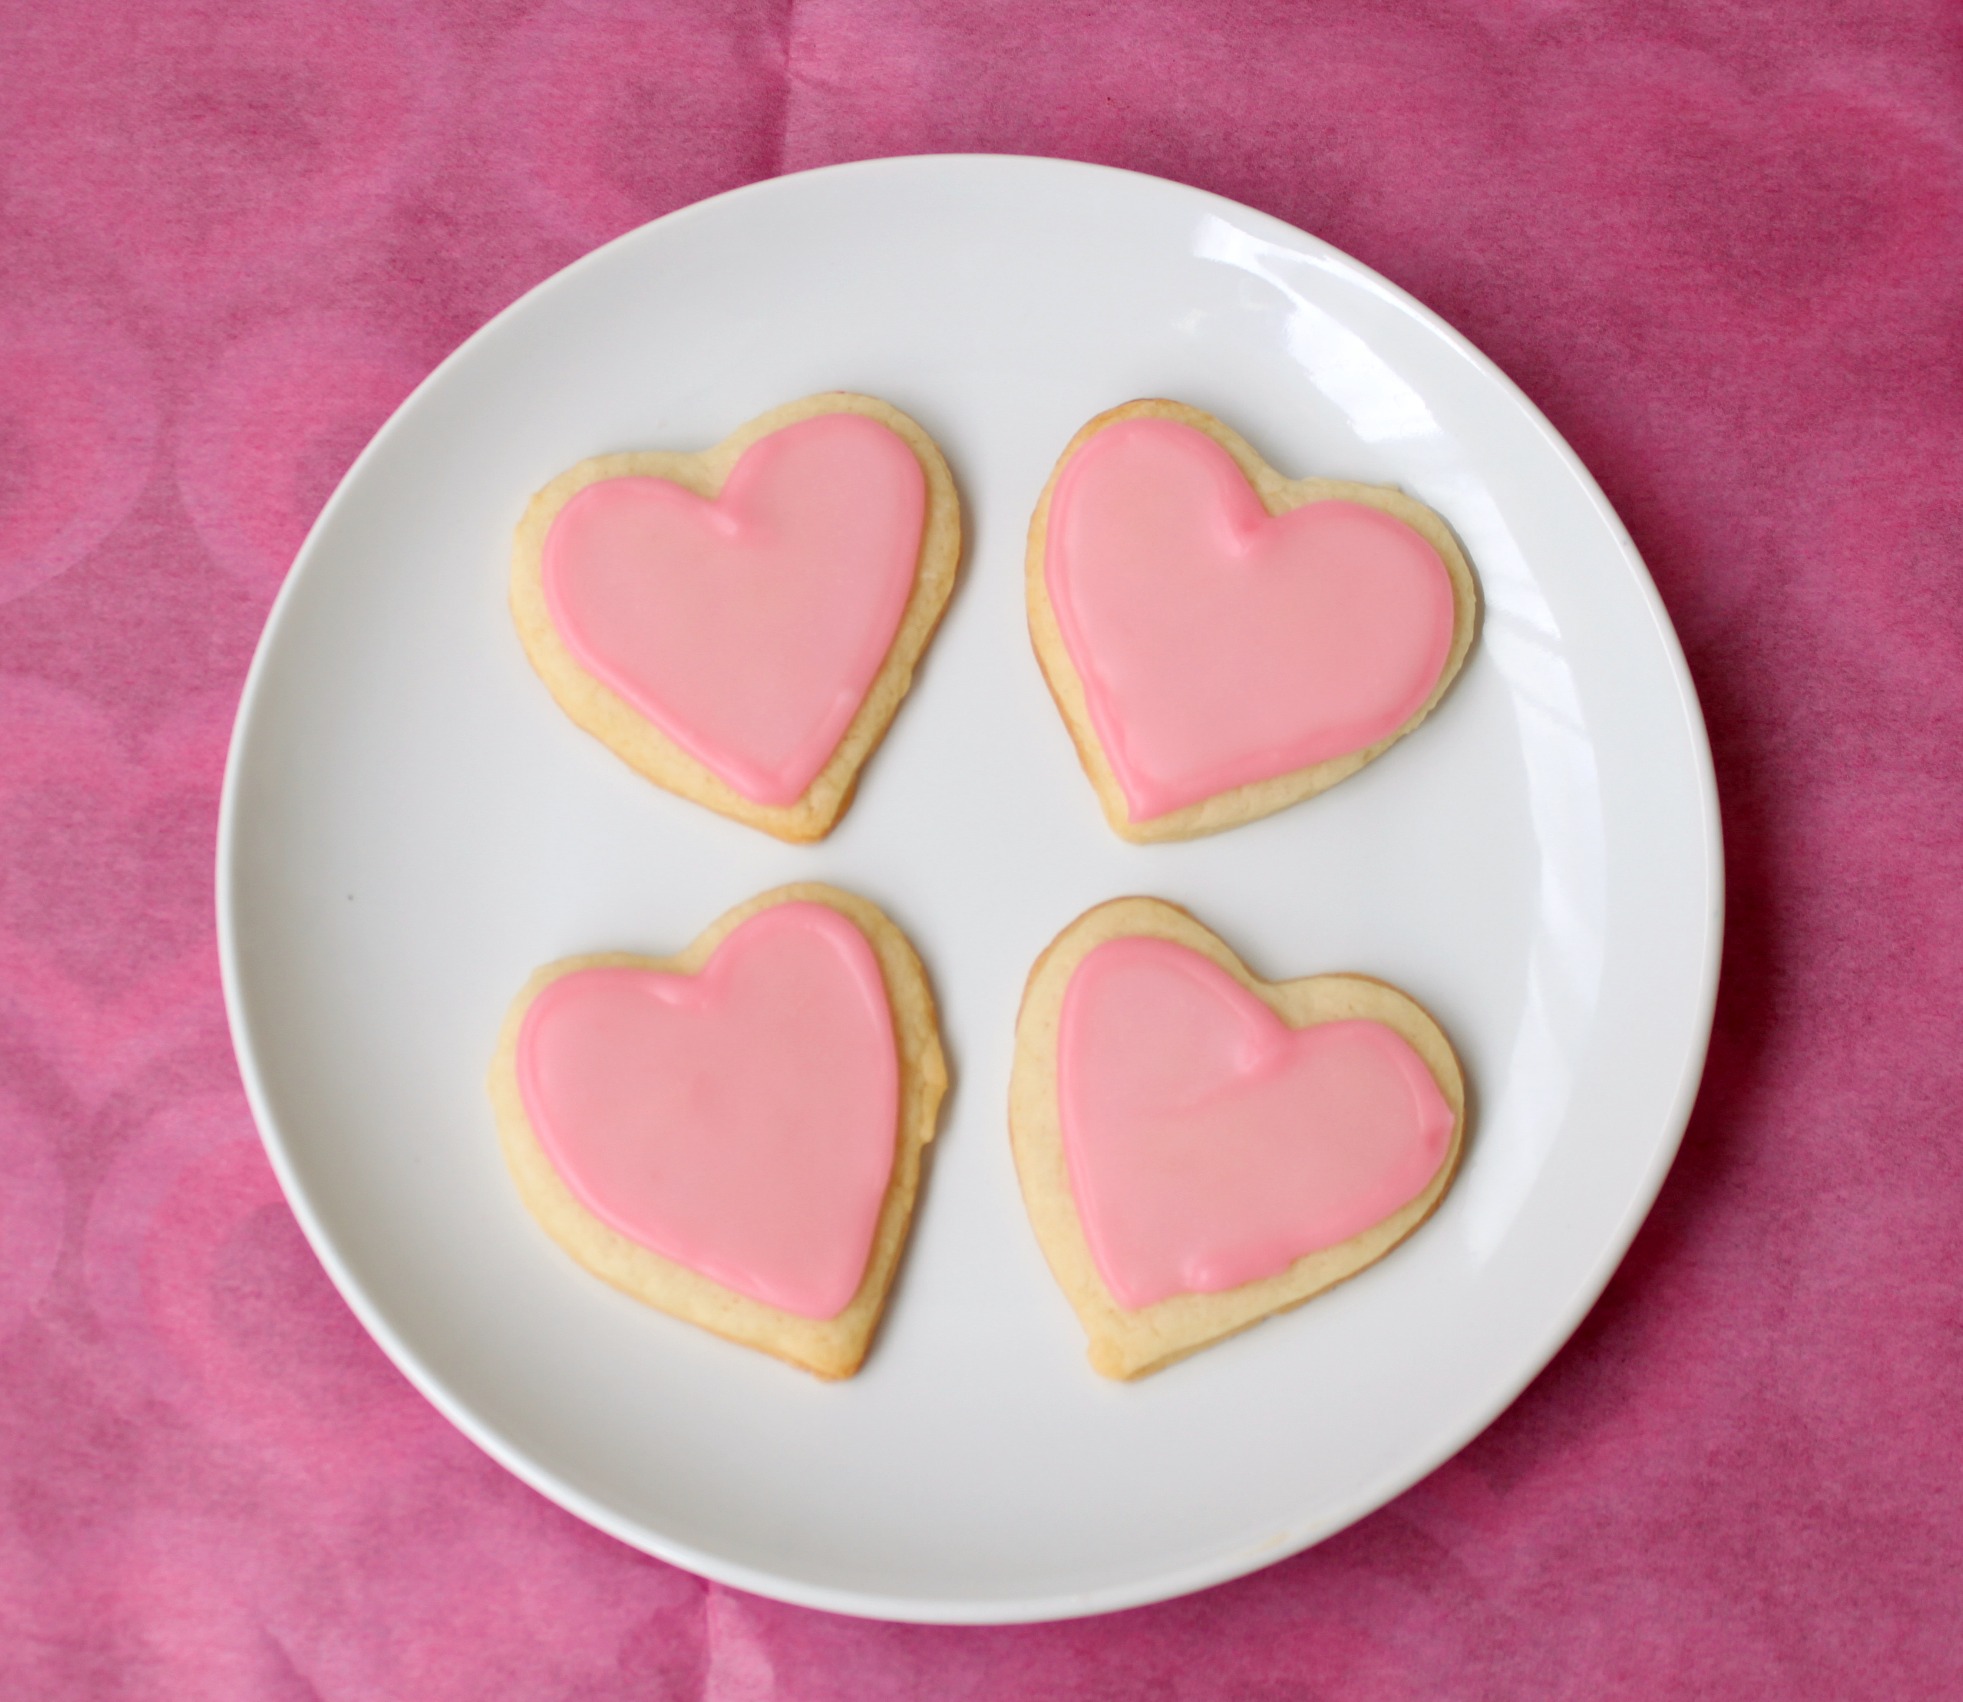 Light pink heart shaped sugar cookies